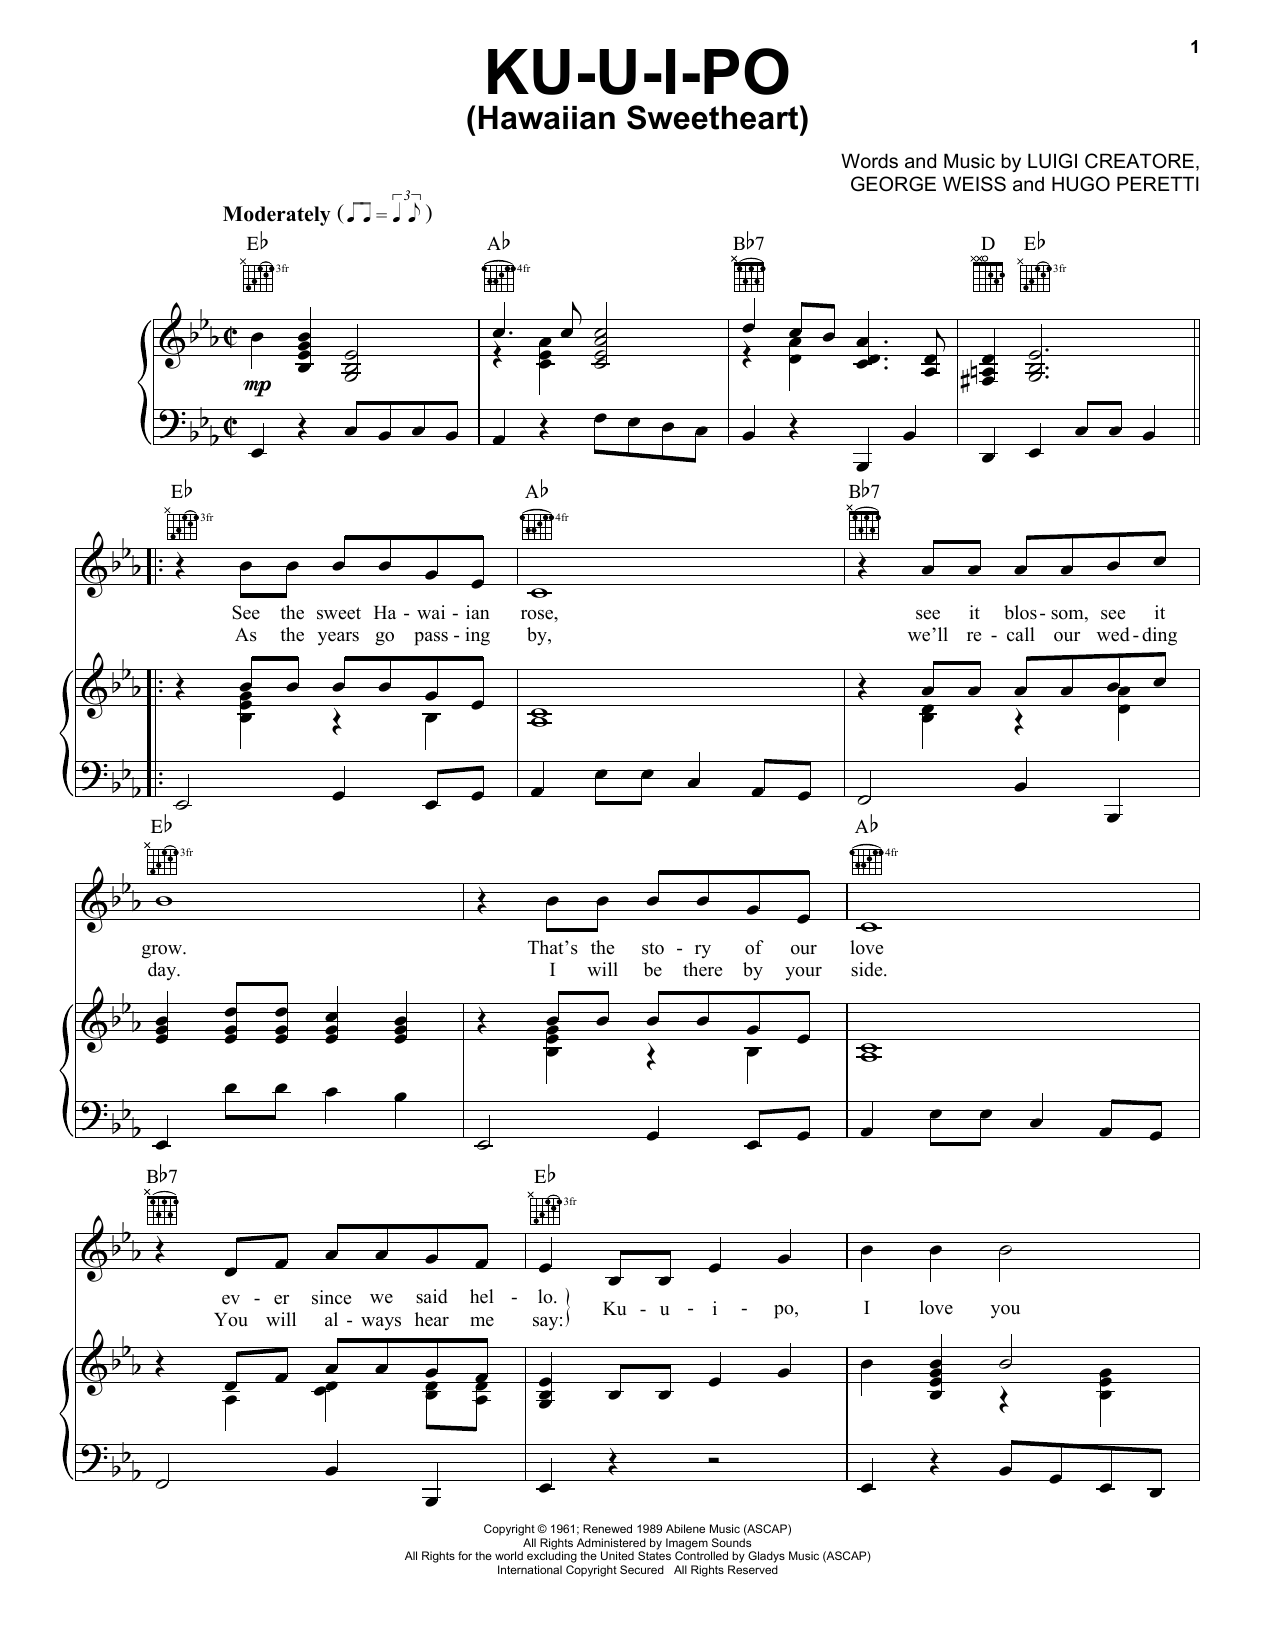 Elvis Presley Ku-U-I-Po (Hawaiian Sweetheart) Sheet Music Notes & Chords for Piano, Vocal & Guitar (Right-Hand Melody) - Download or Print PDF